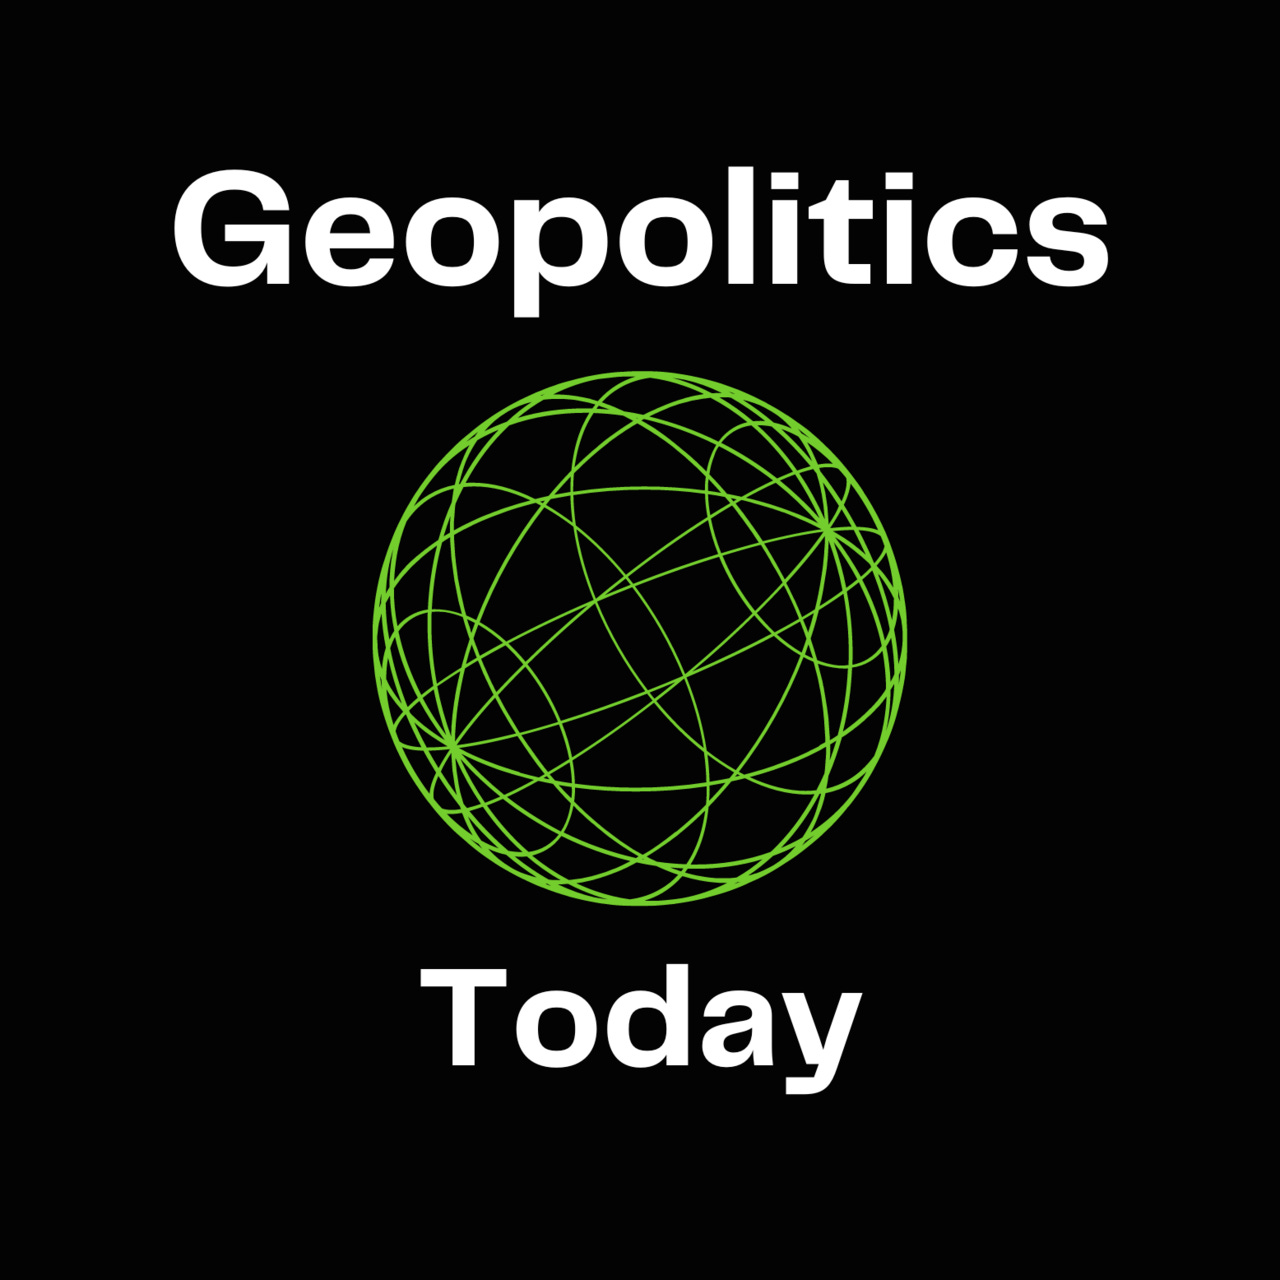 Geopolitics Today